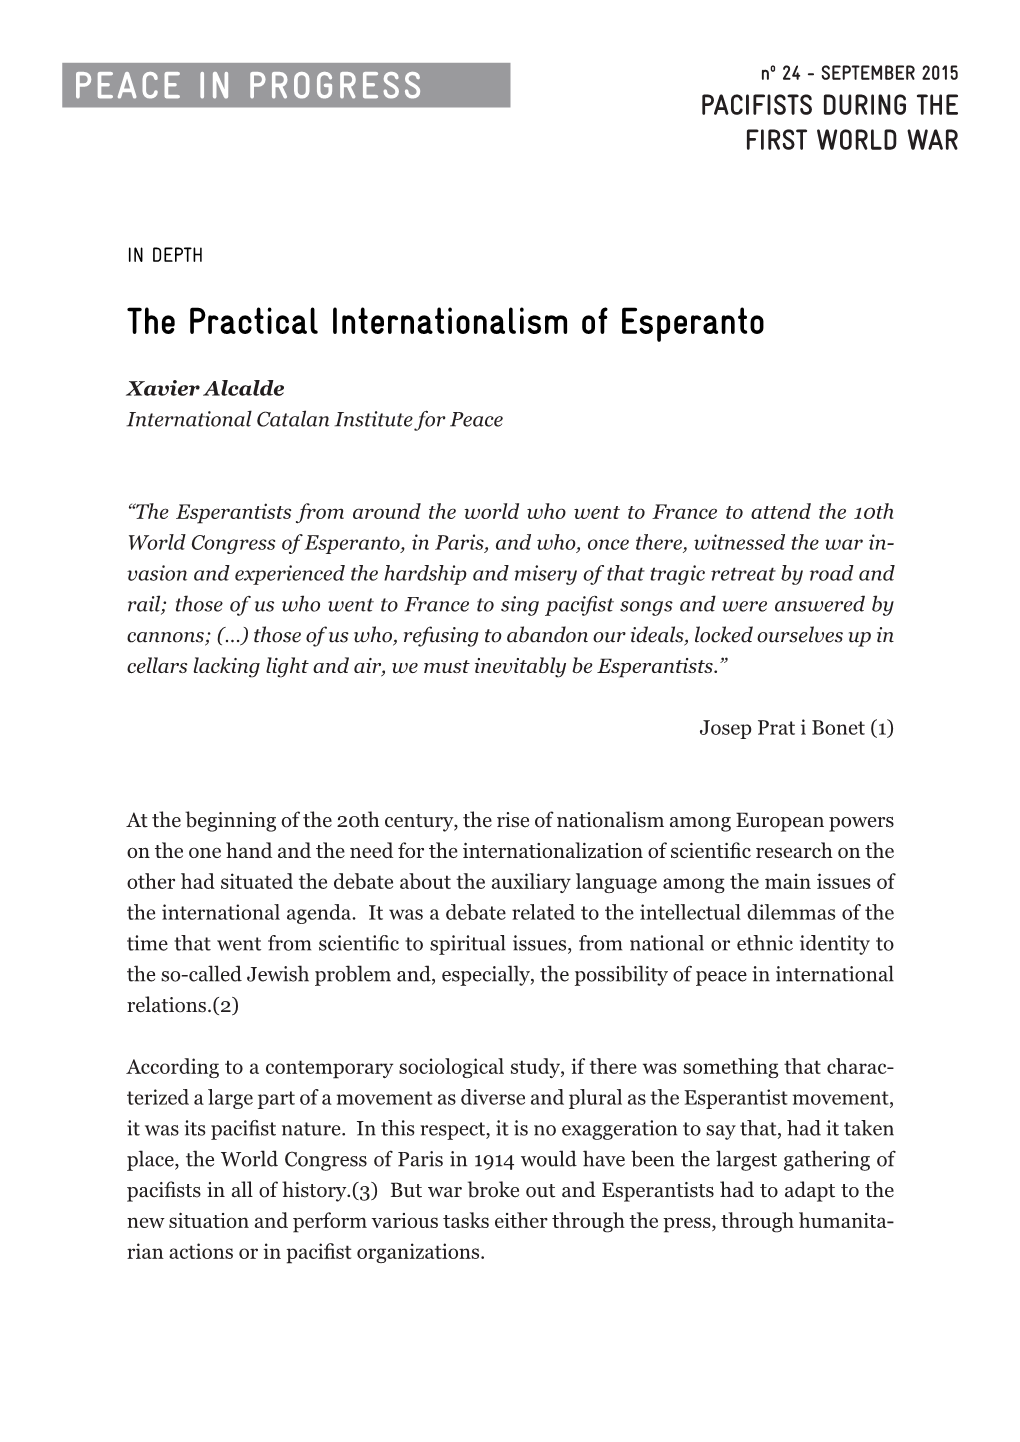 The Practical Internationalism of Esperanto